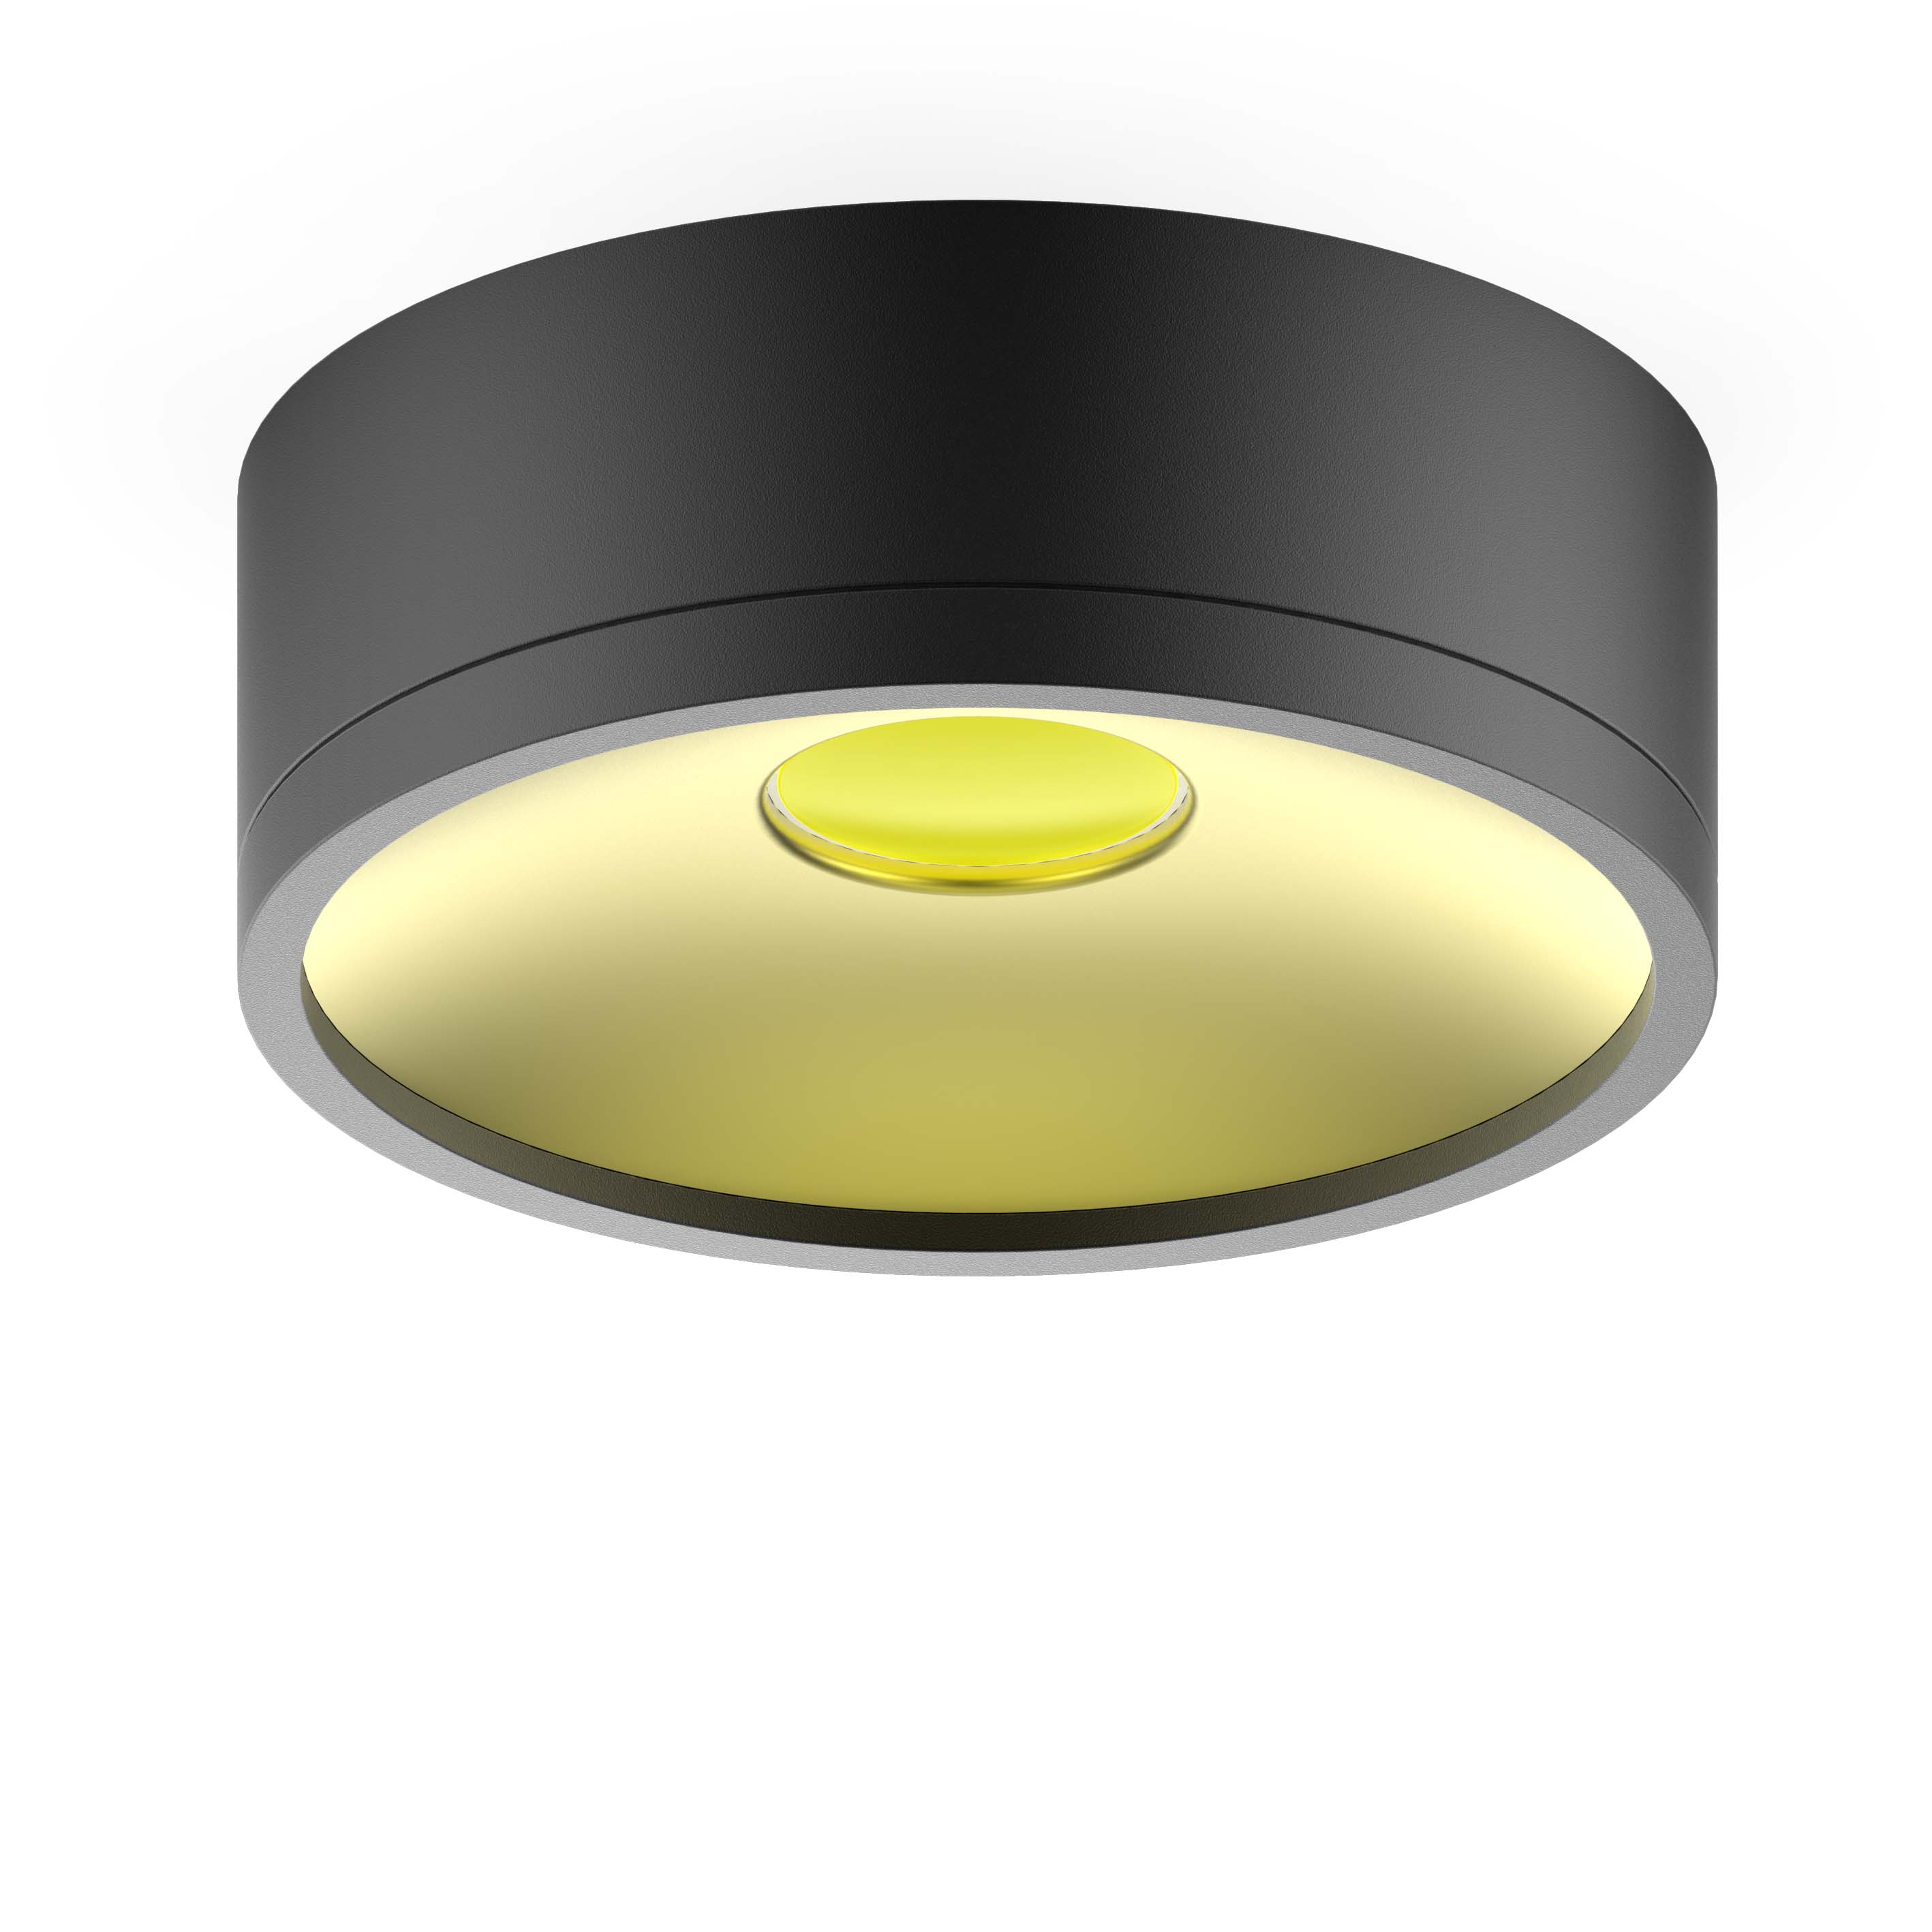 LED светильник накладной HD026 12W (черный/золото) 3000K 140х50,770лм, 1/30 led светильник накладной hd026 12w черный золото 3000k 140х50 770лм 1 30